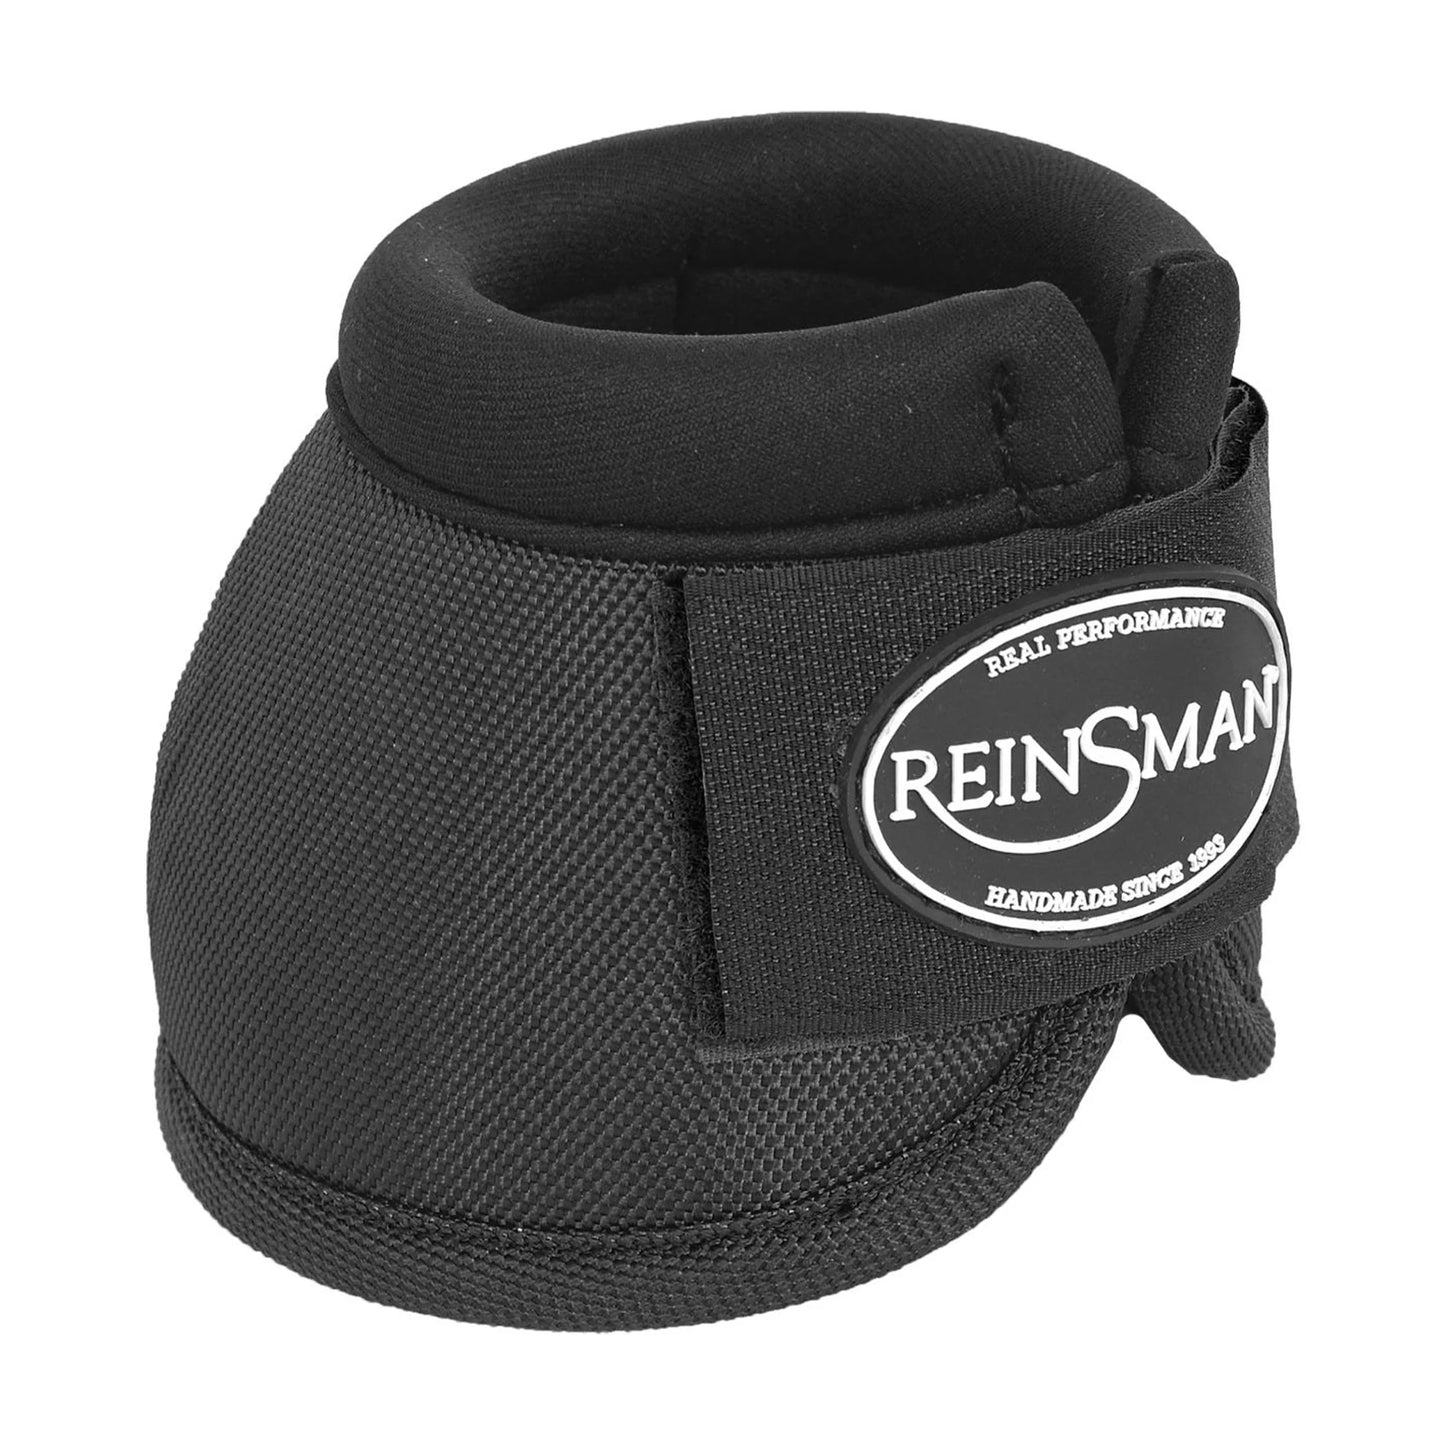 Reinsman Apex Bell Boots - Black - Medium - CYRE9125BK-M